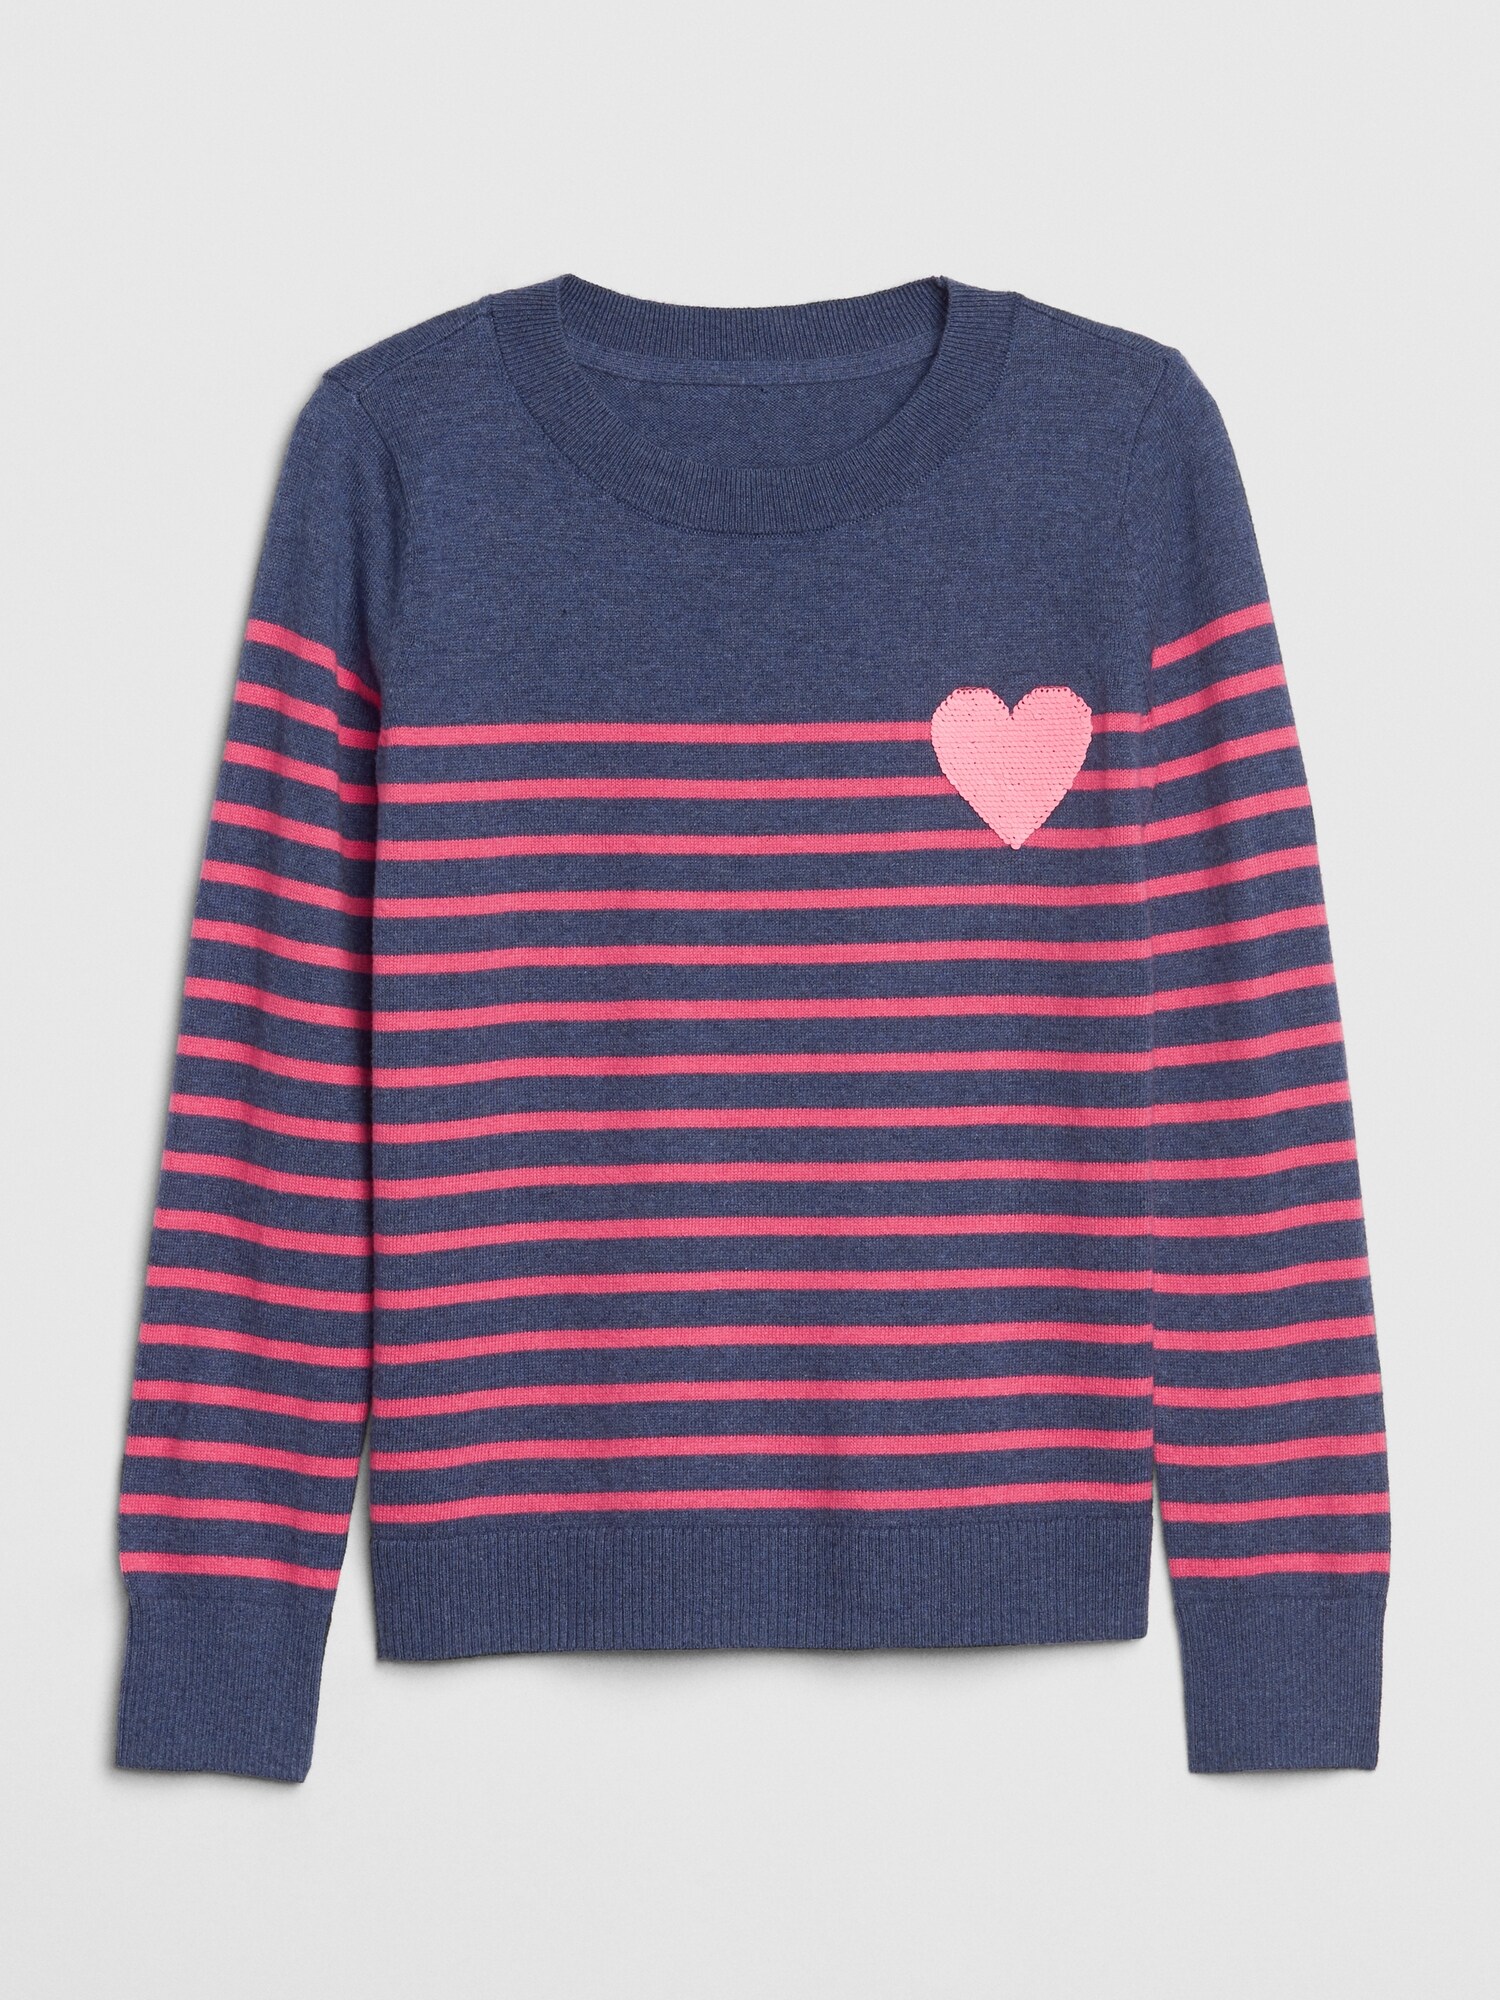 gap heart sweater